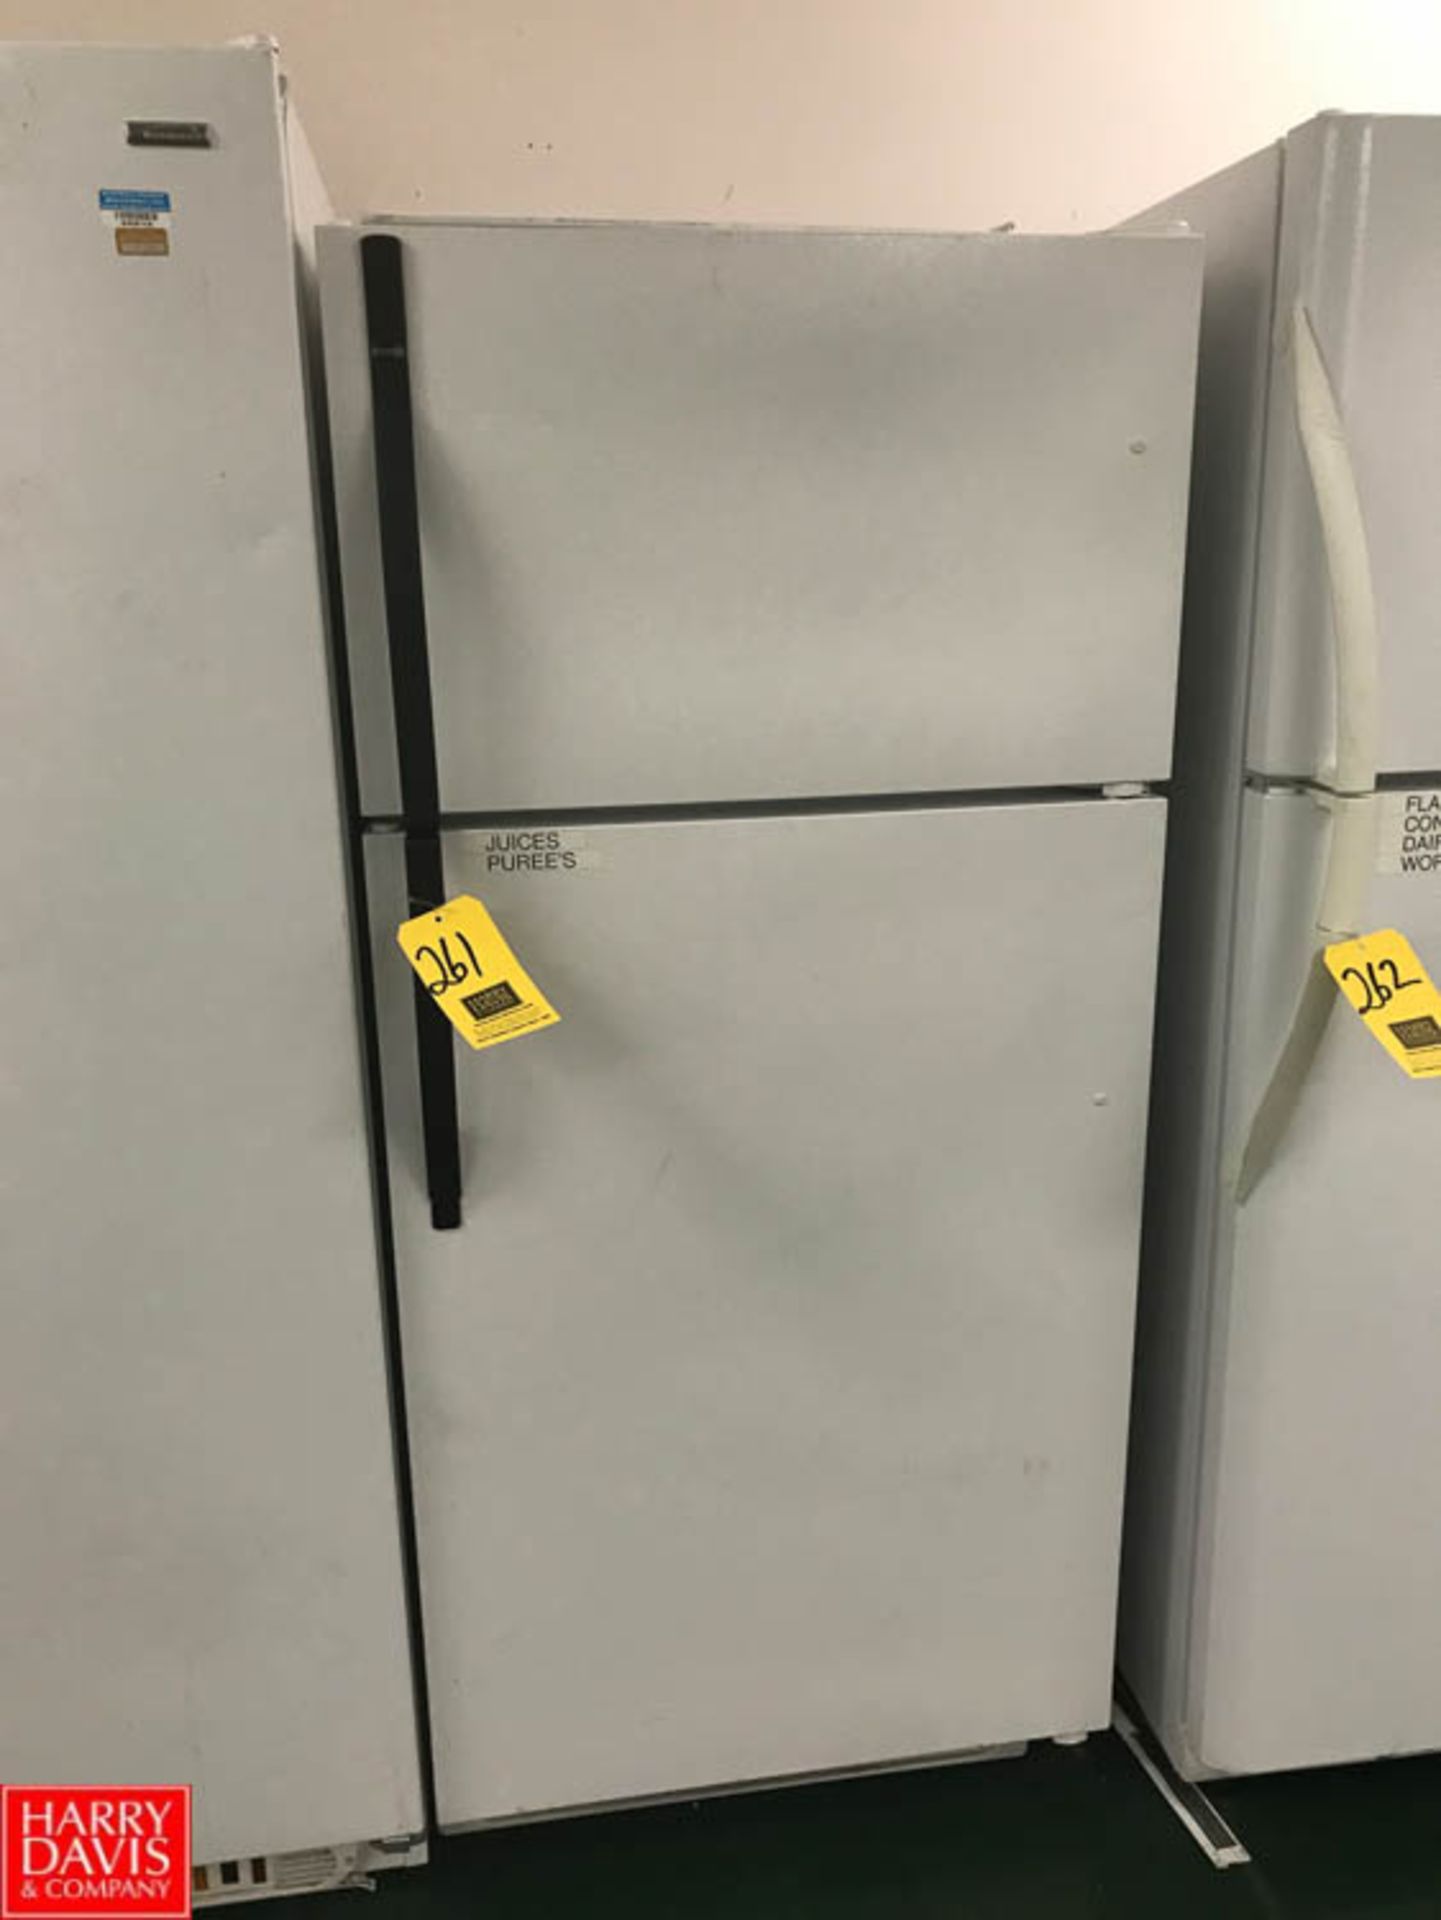 Refrigerator Rigging Fee: $ 30